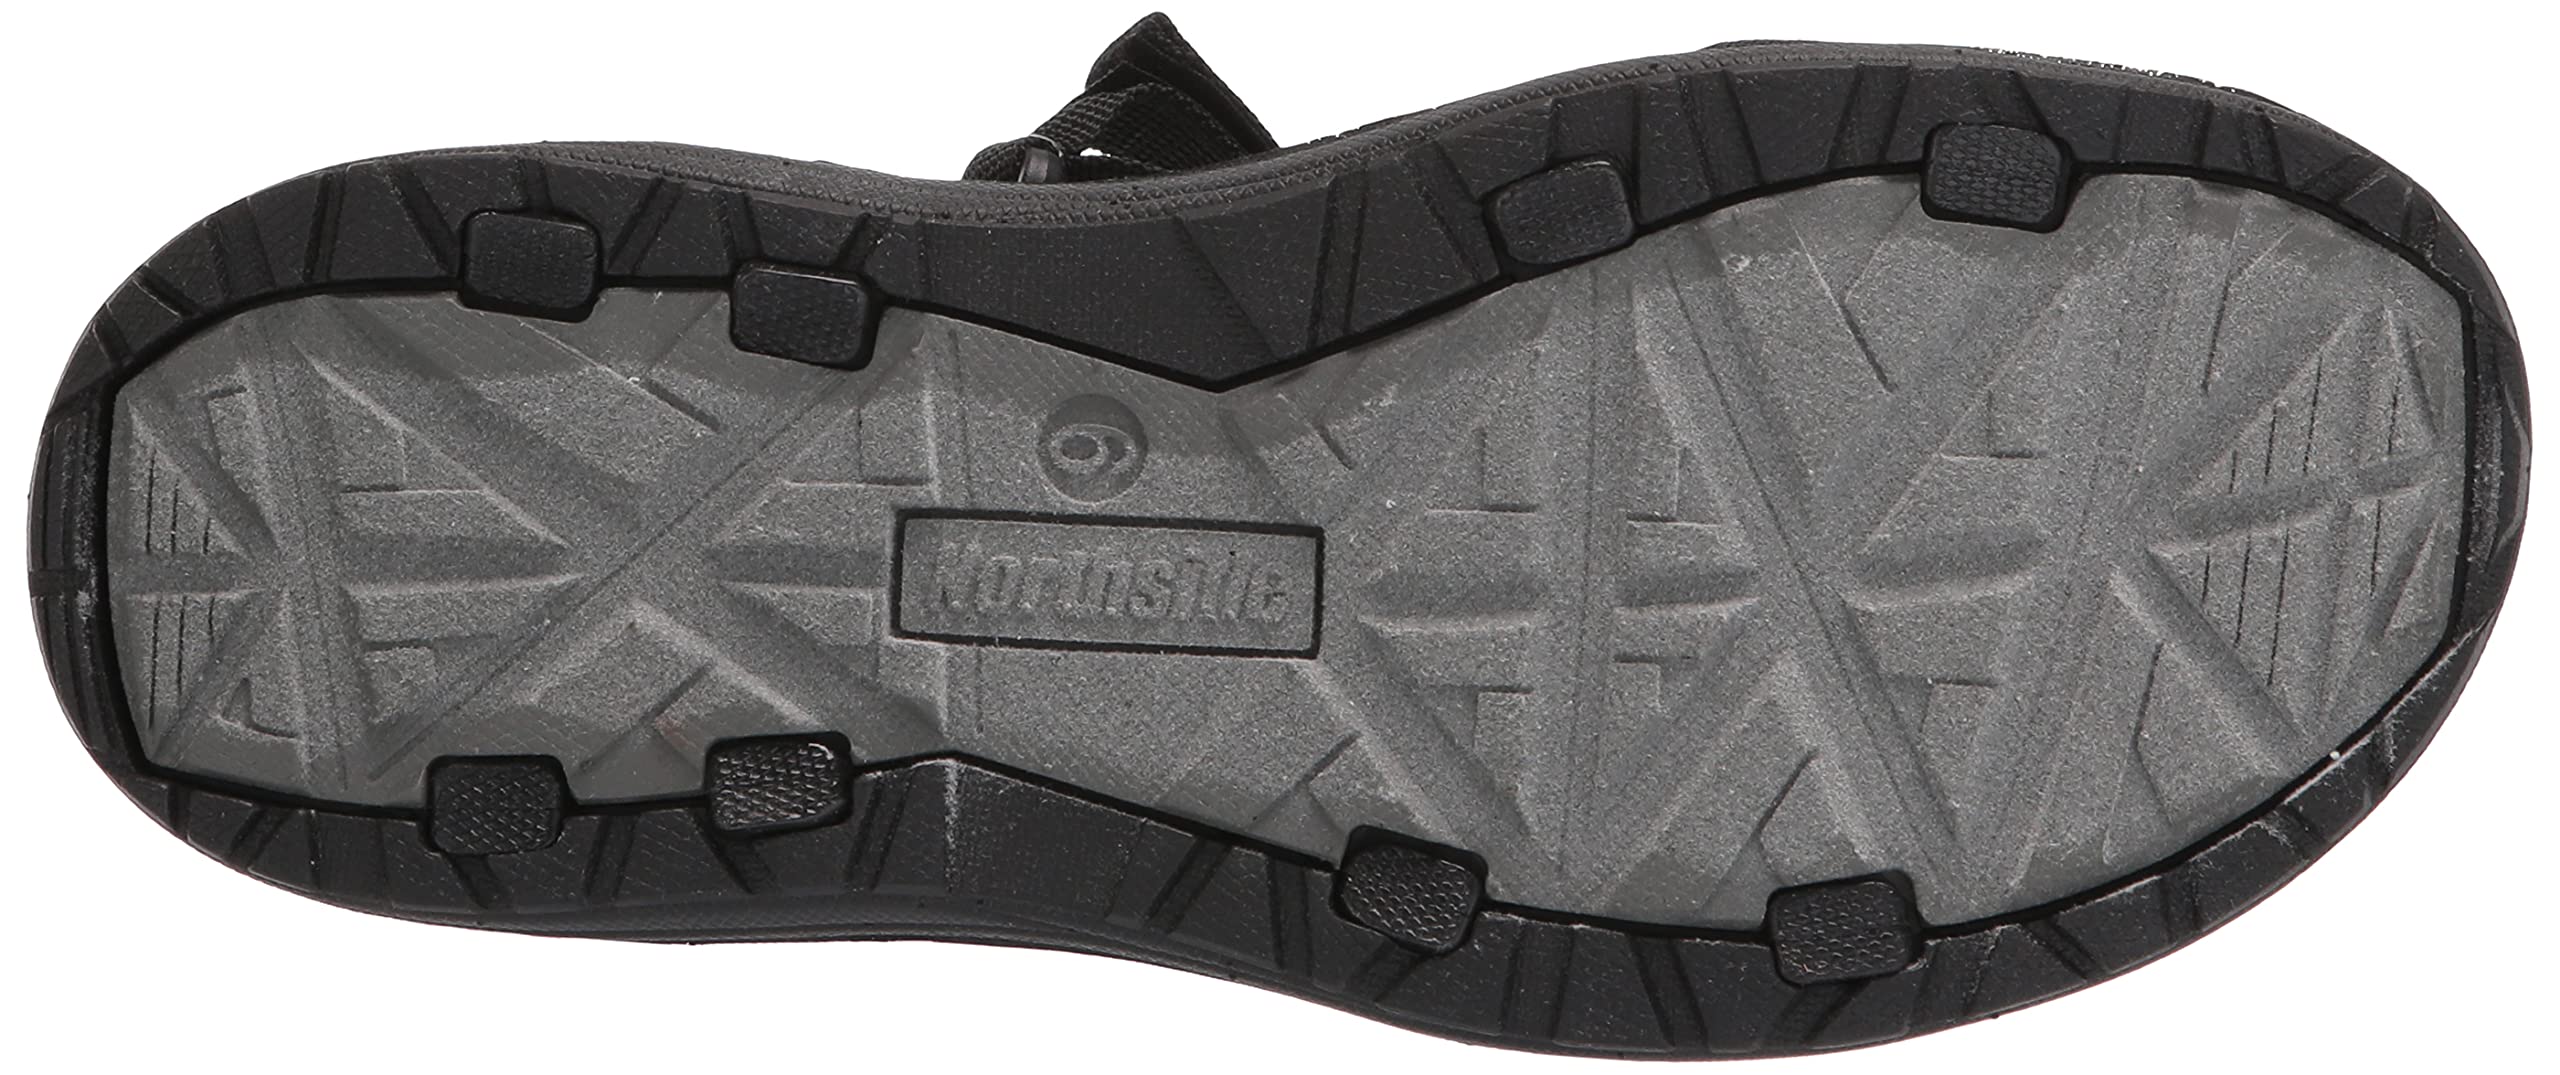 Northside Unisex-Child Bayview Open Toe Sport Sandal